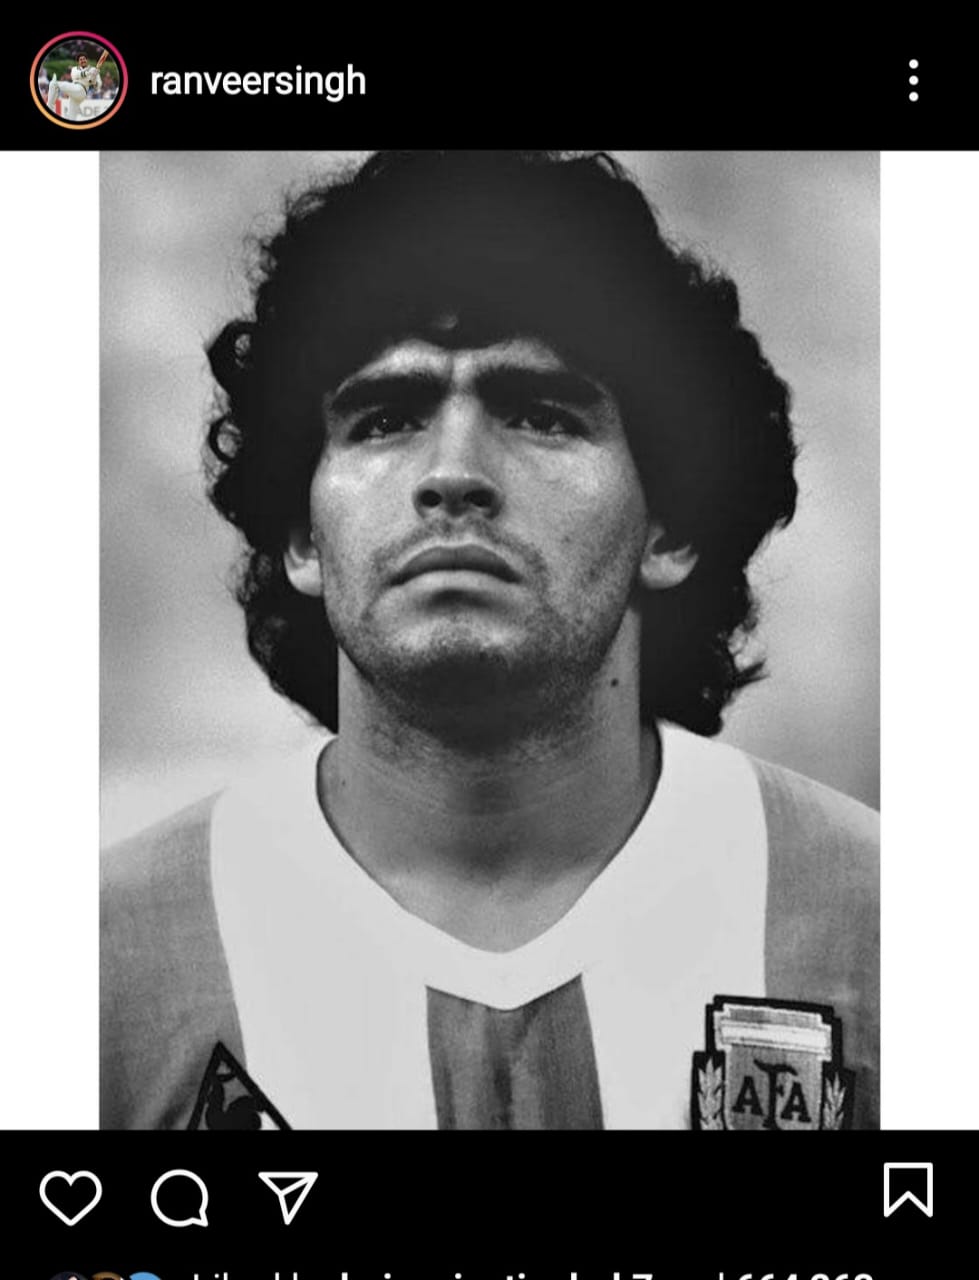 RIP Maradona: Shah Rukh Khan, Sourav Ganguly & Ranveer Singh get emotional after legendary footballer's tragic death 1